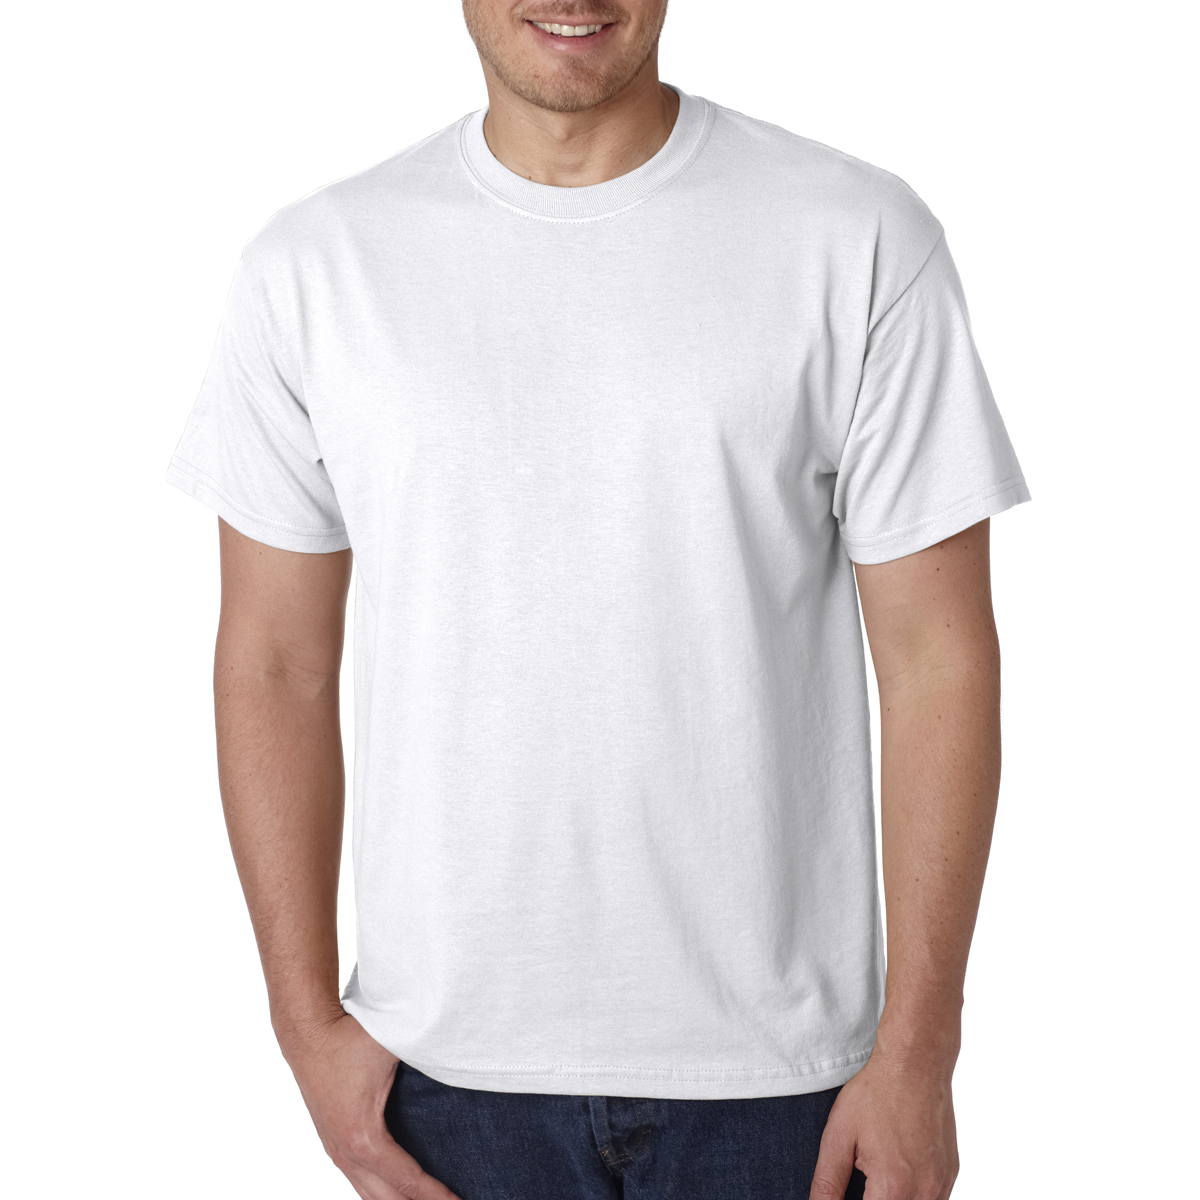 High Resolution Plain White T Shirt Template Png Ghana tips